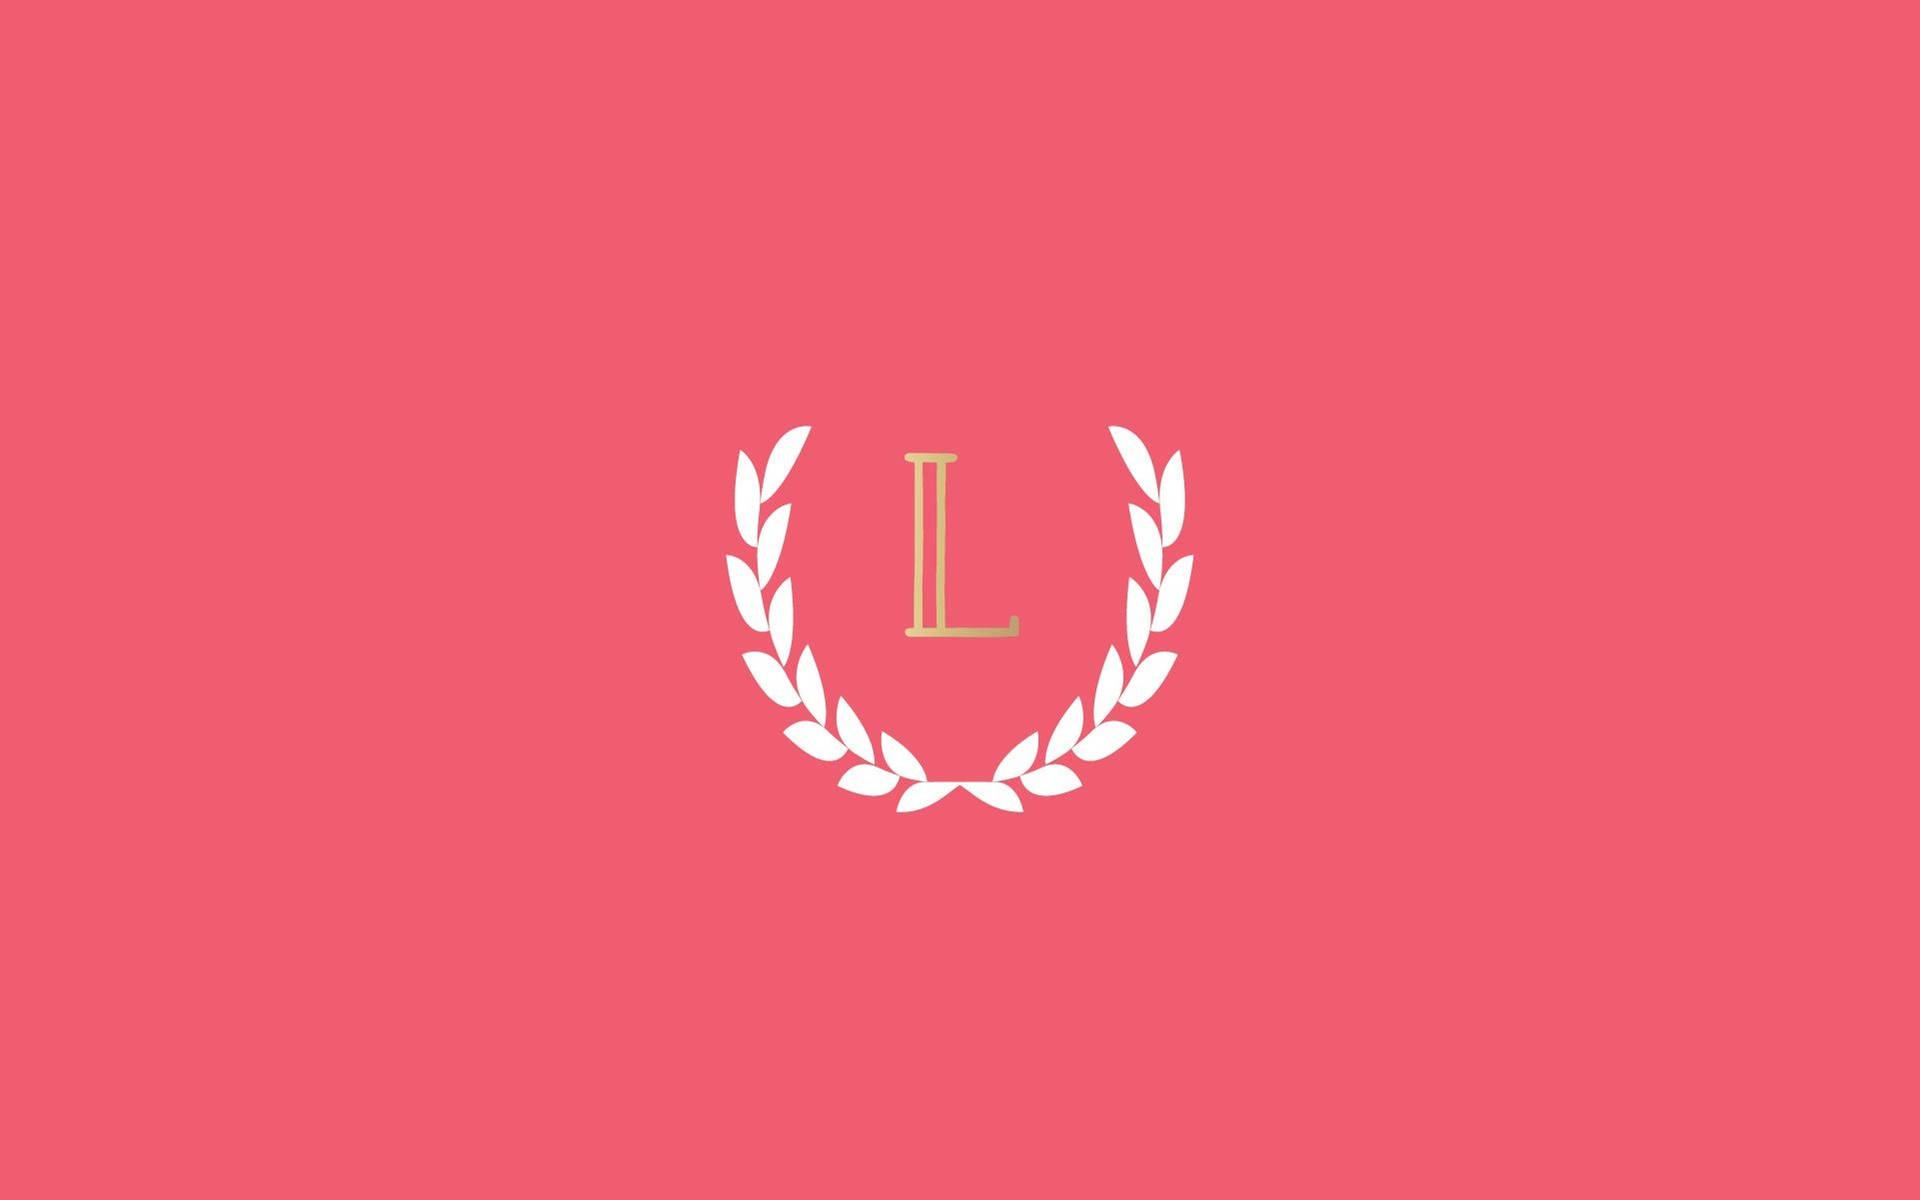 Minimalist Gold Letter L On Pink